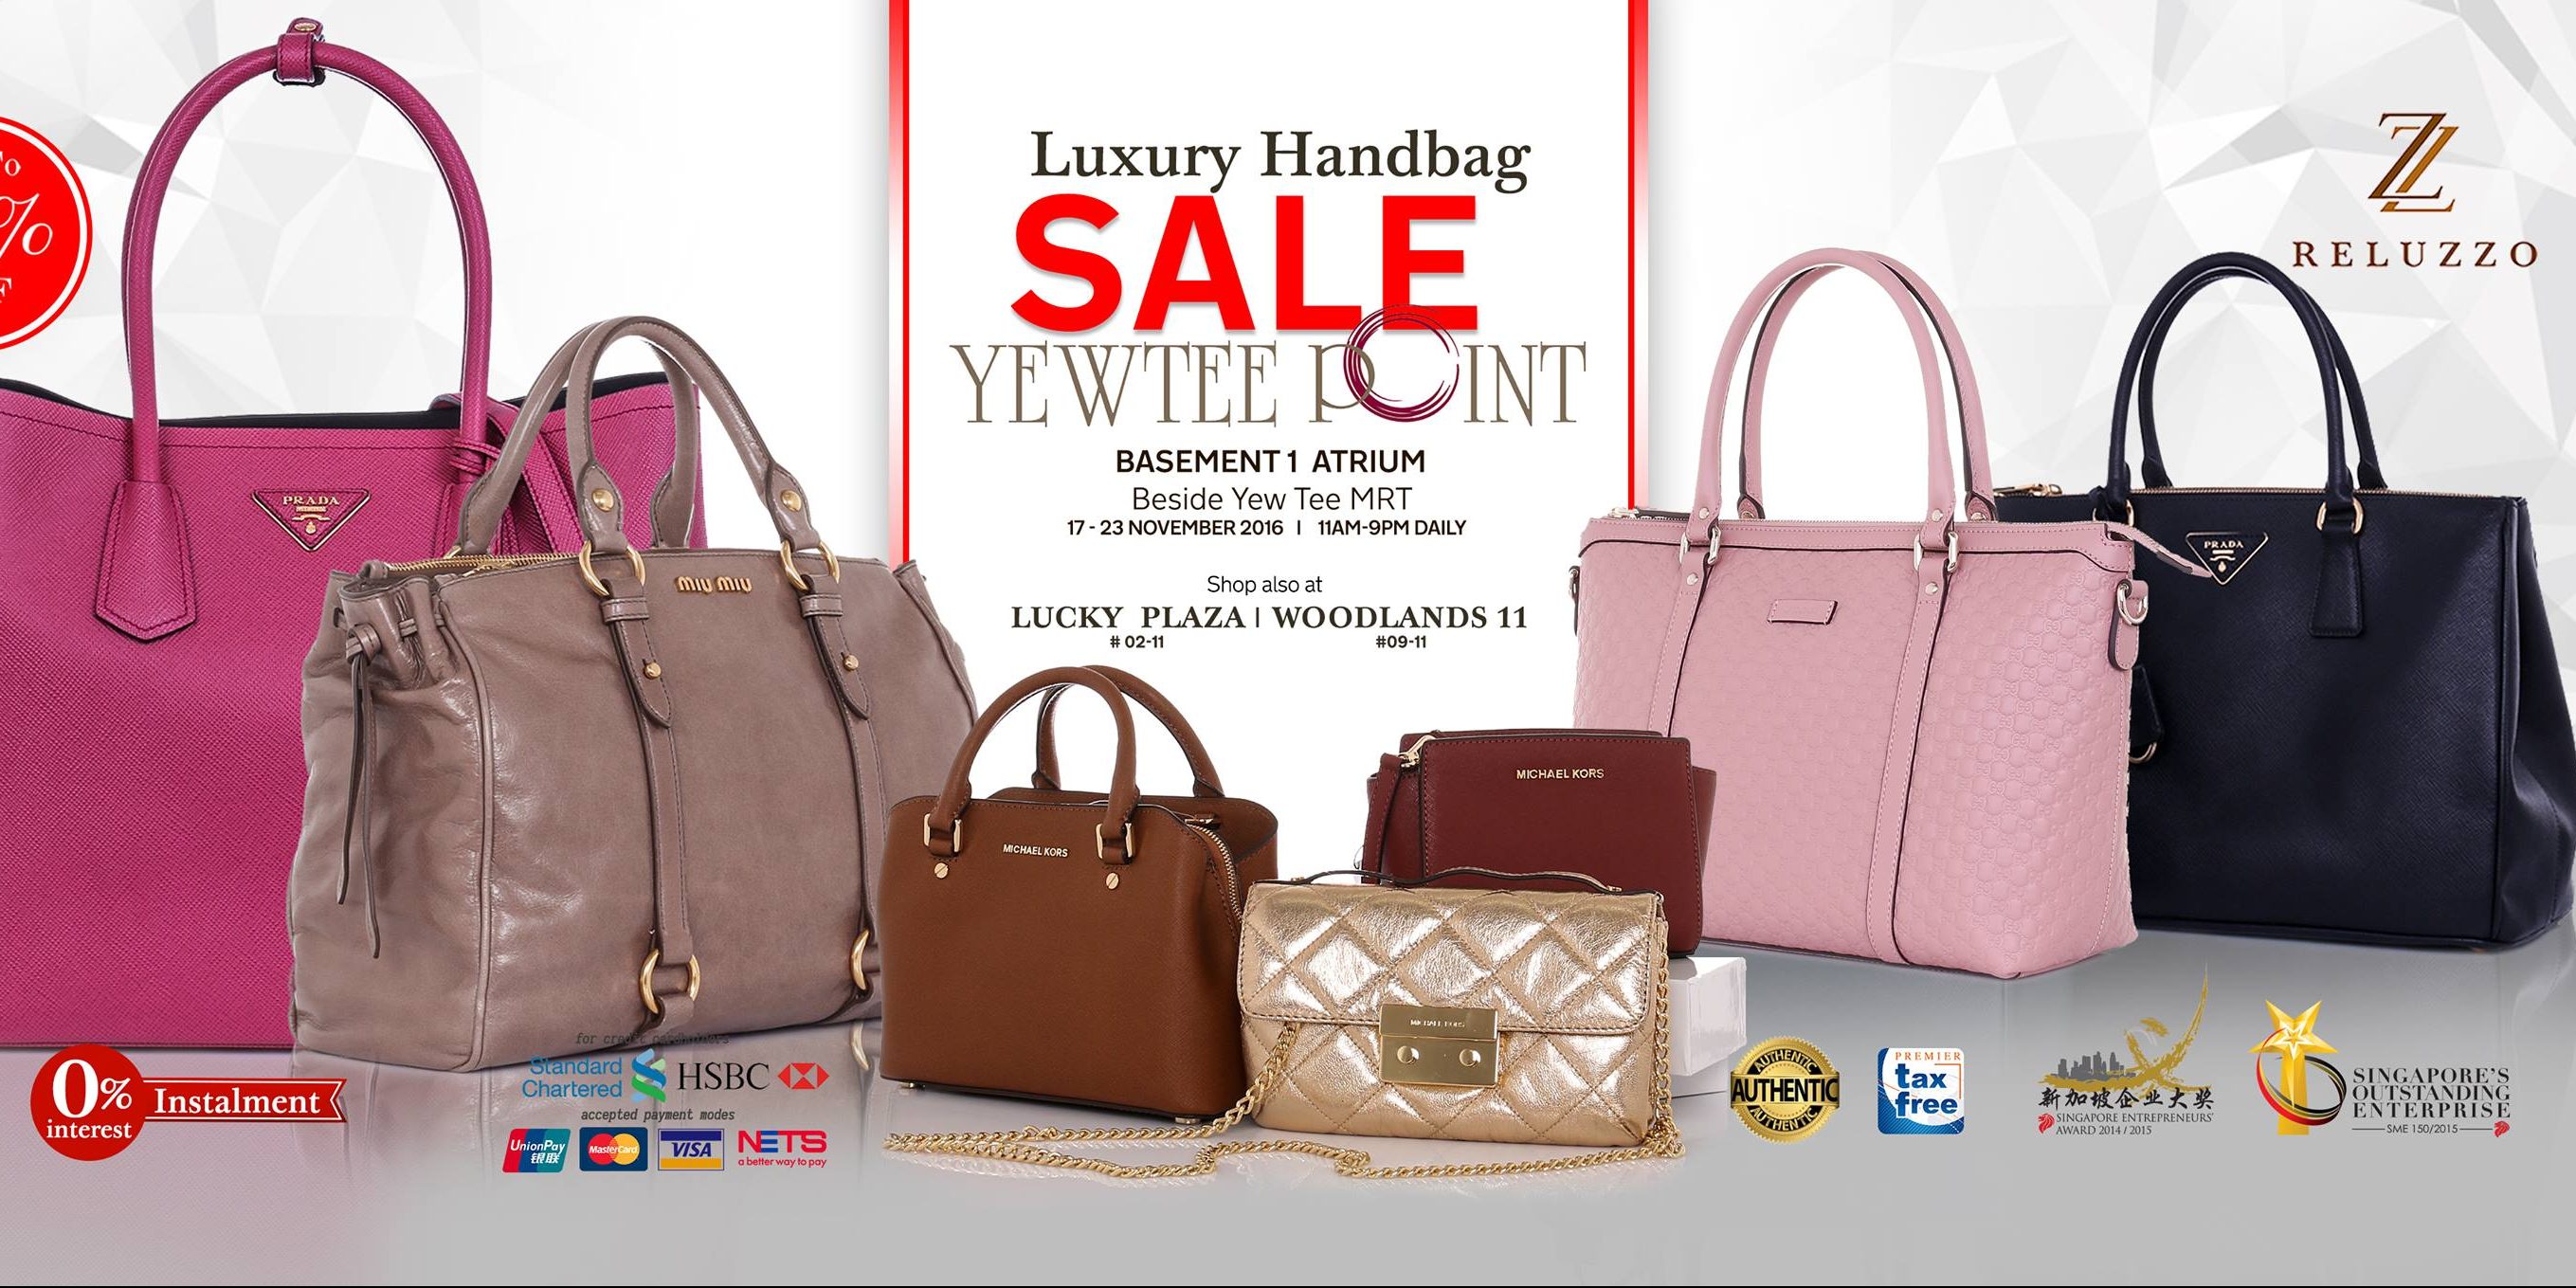 Reluzzo Singapore Luxury Handbag Sale Promotion 17-23 Nov 2016